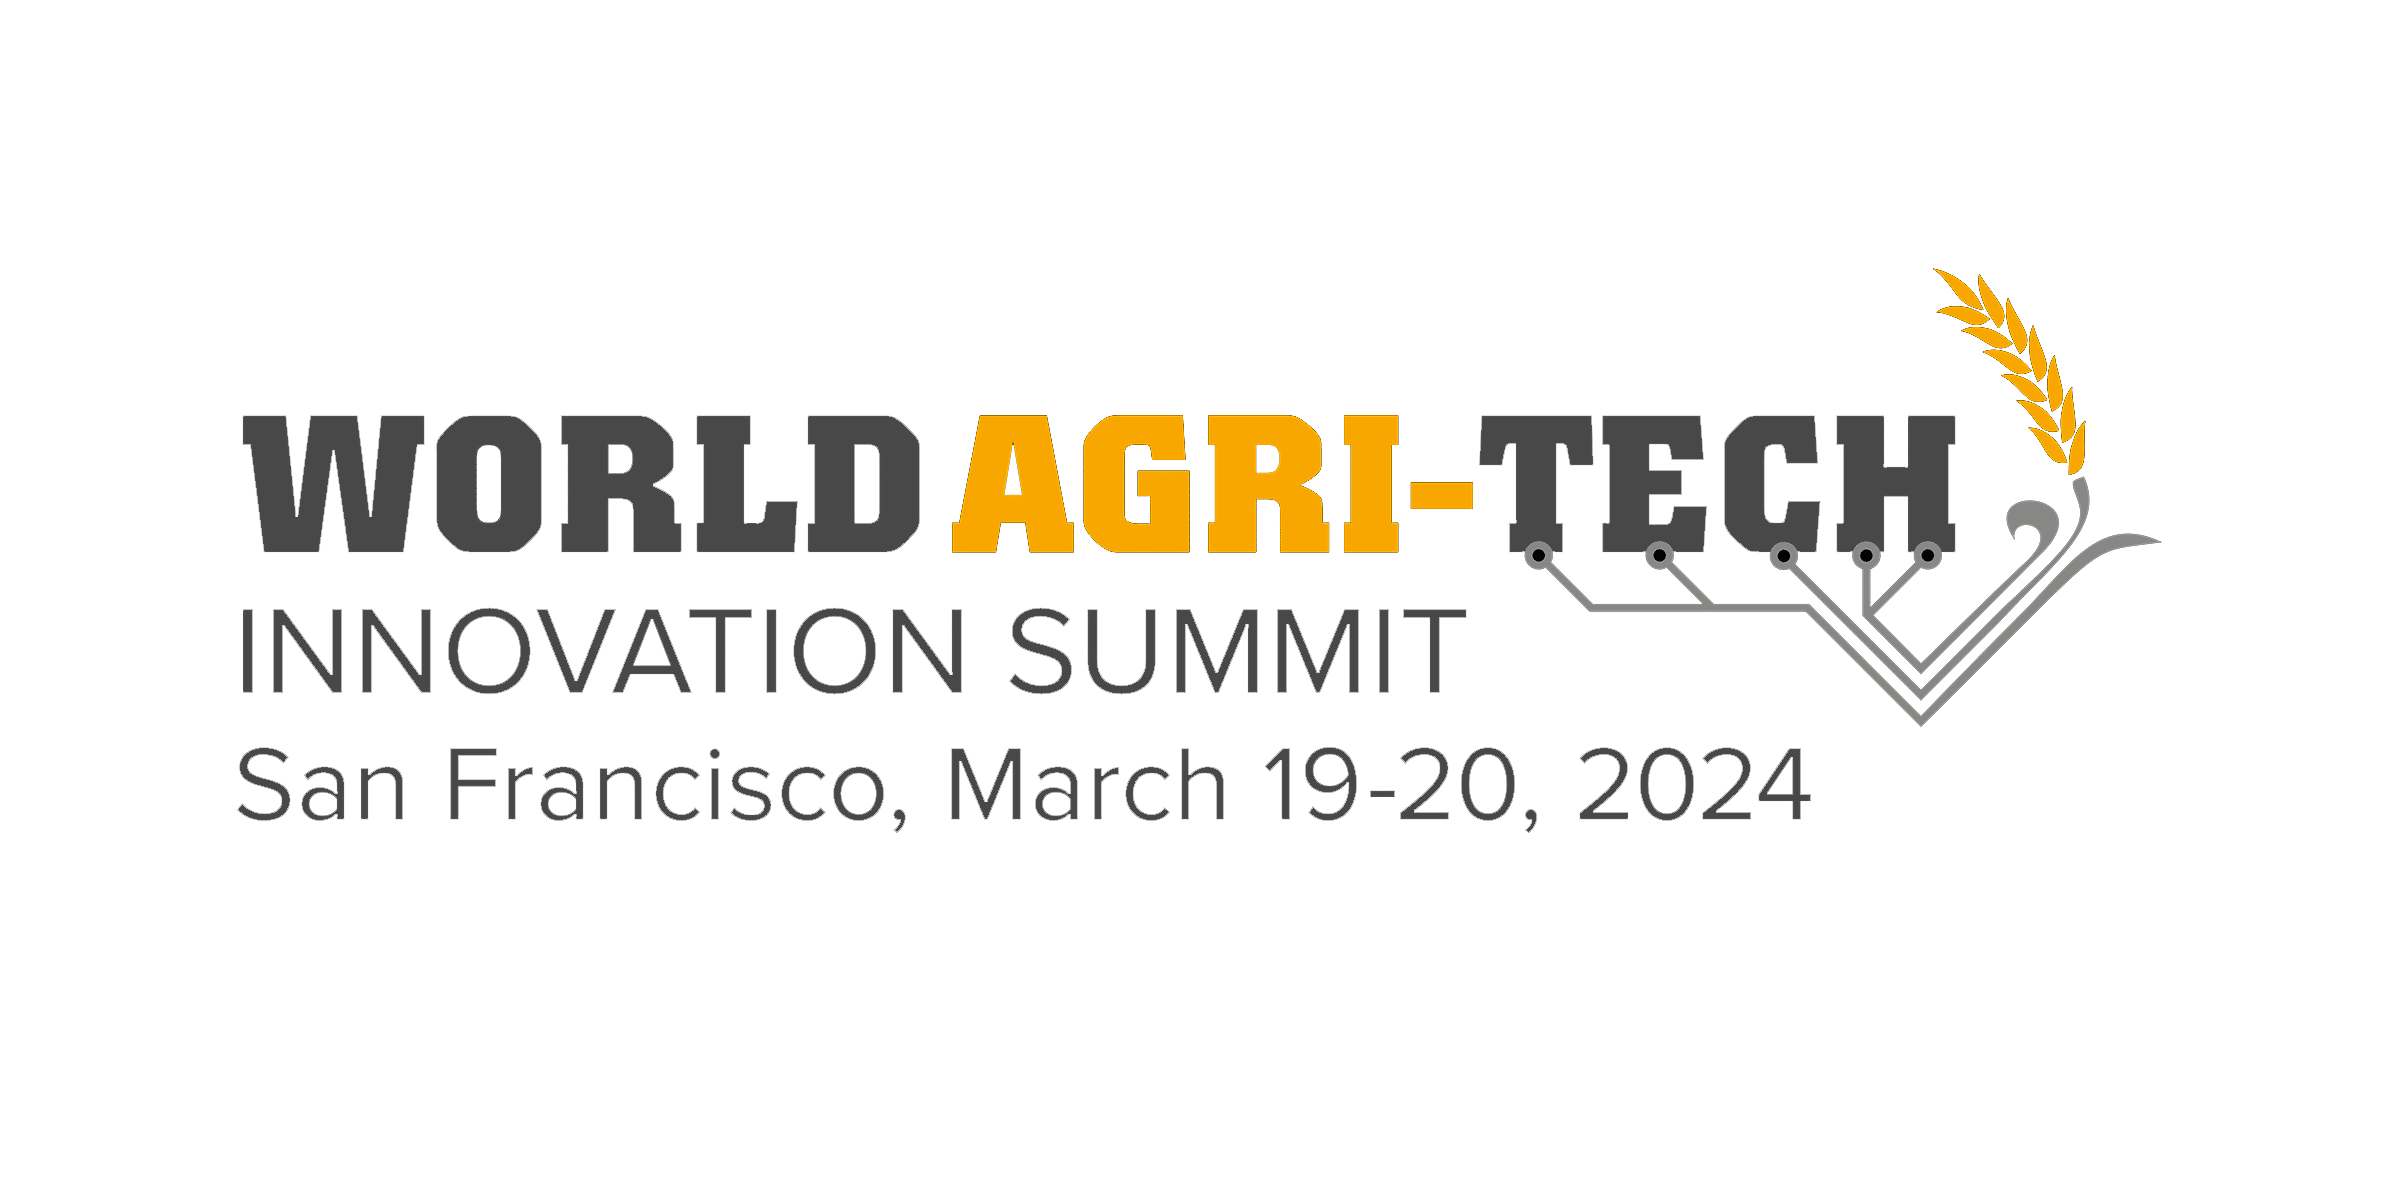 World Agri-Tech